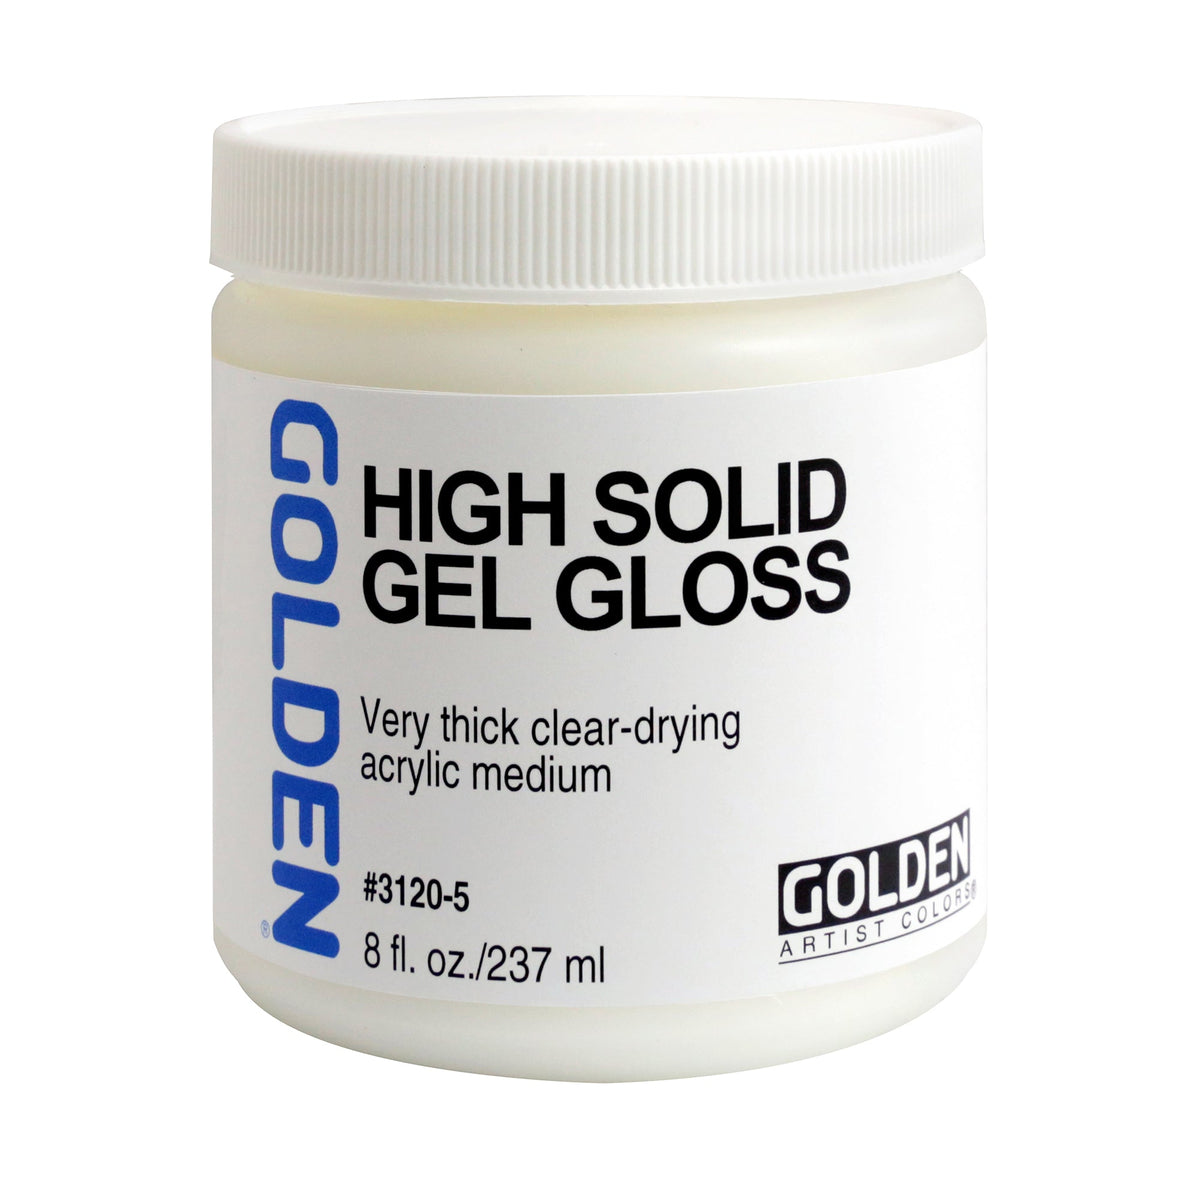 High Solid Gels